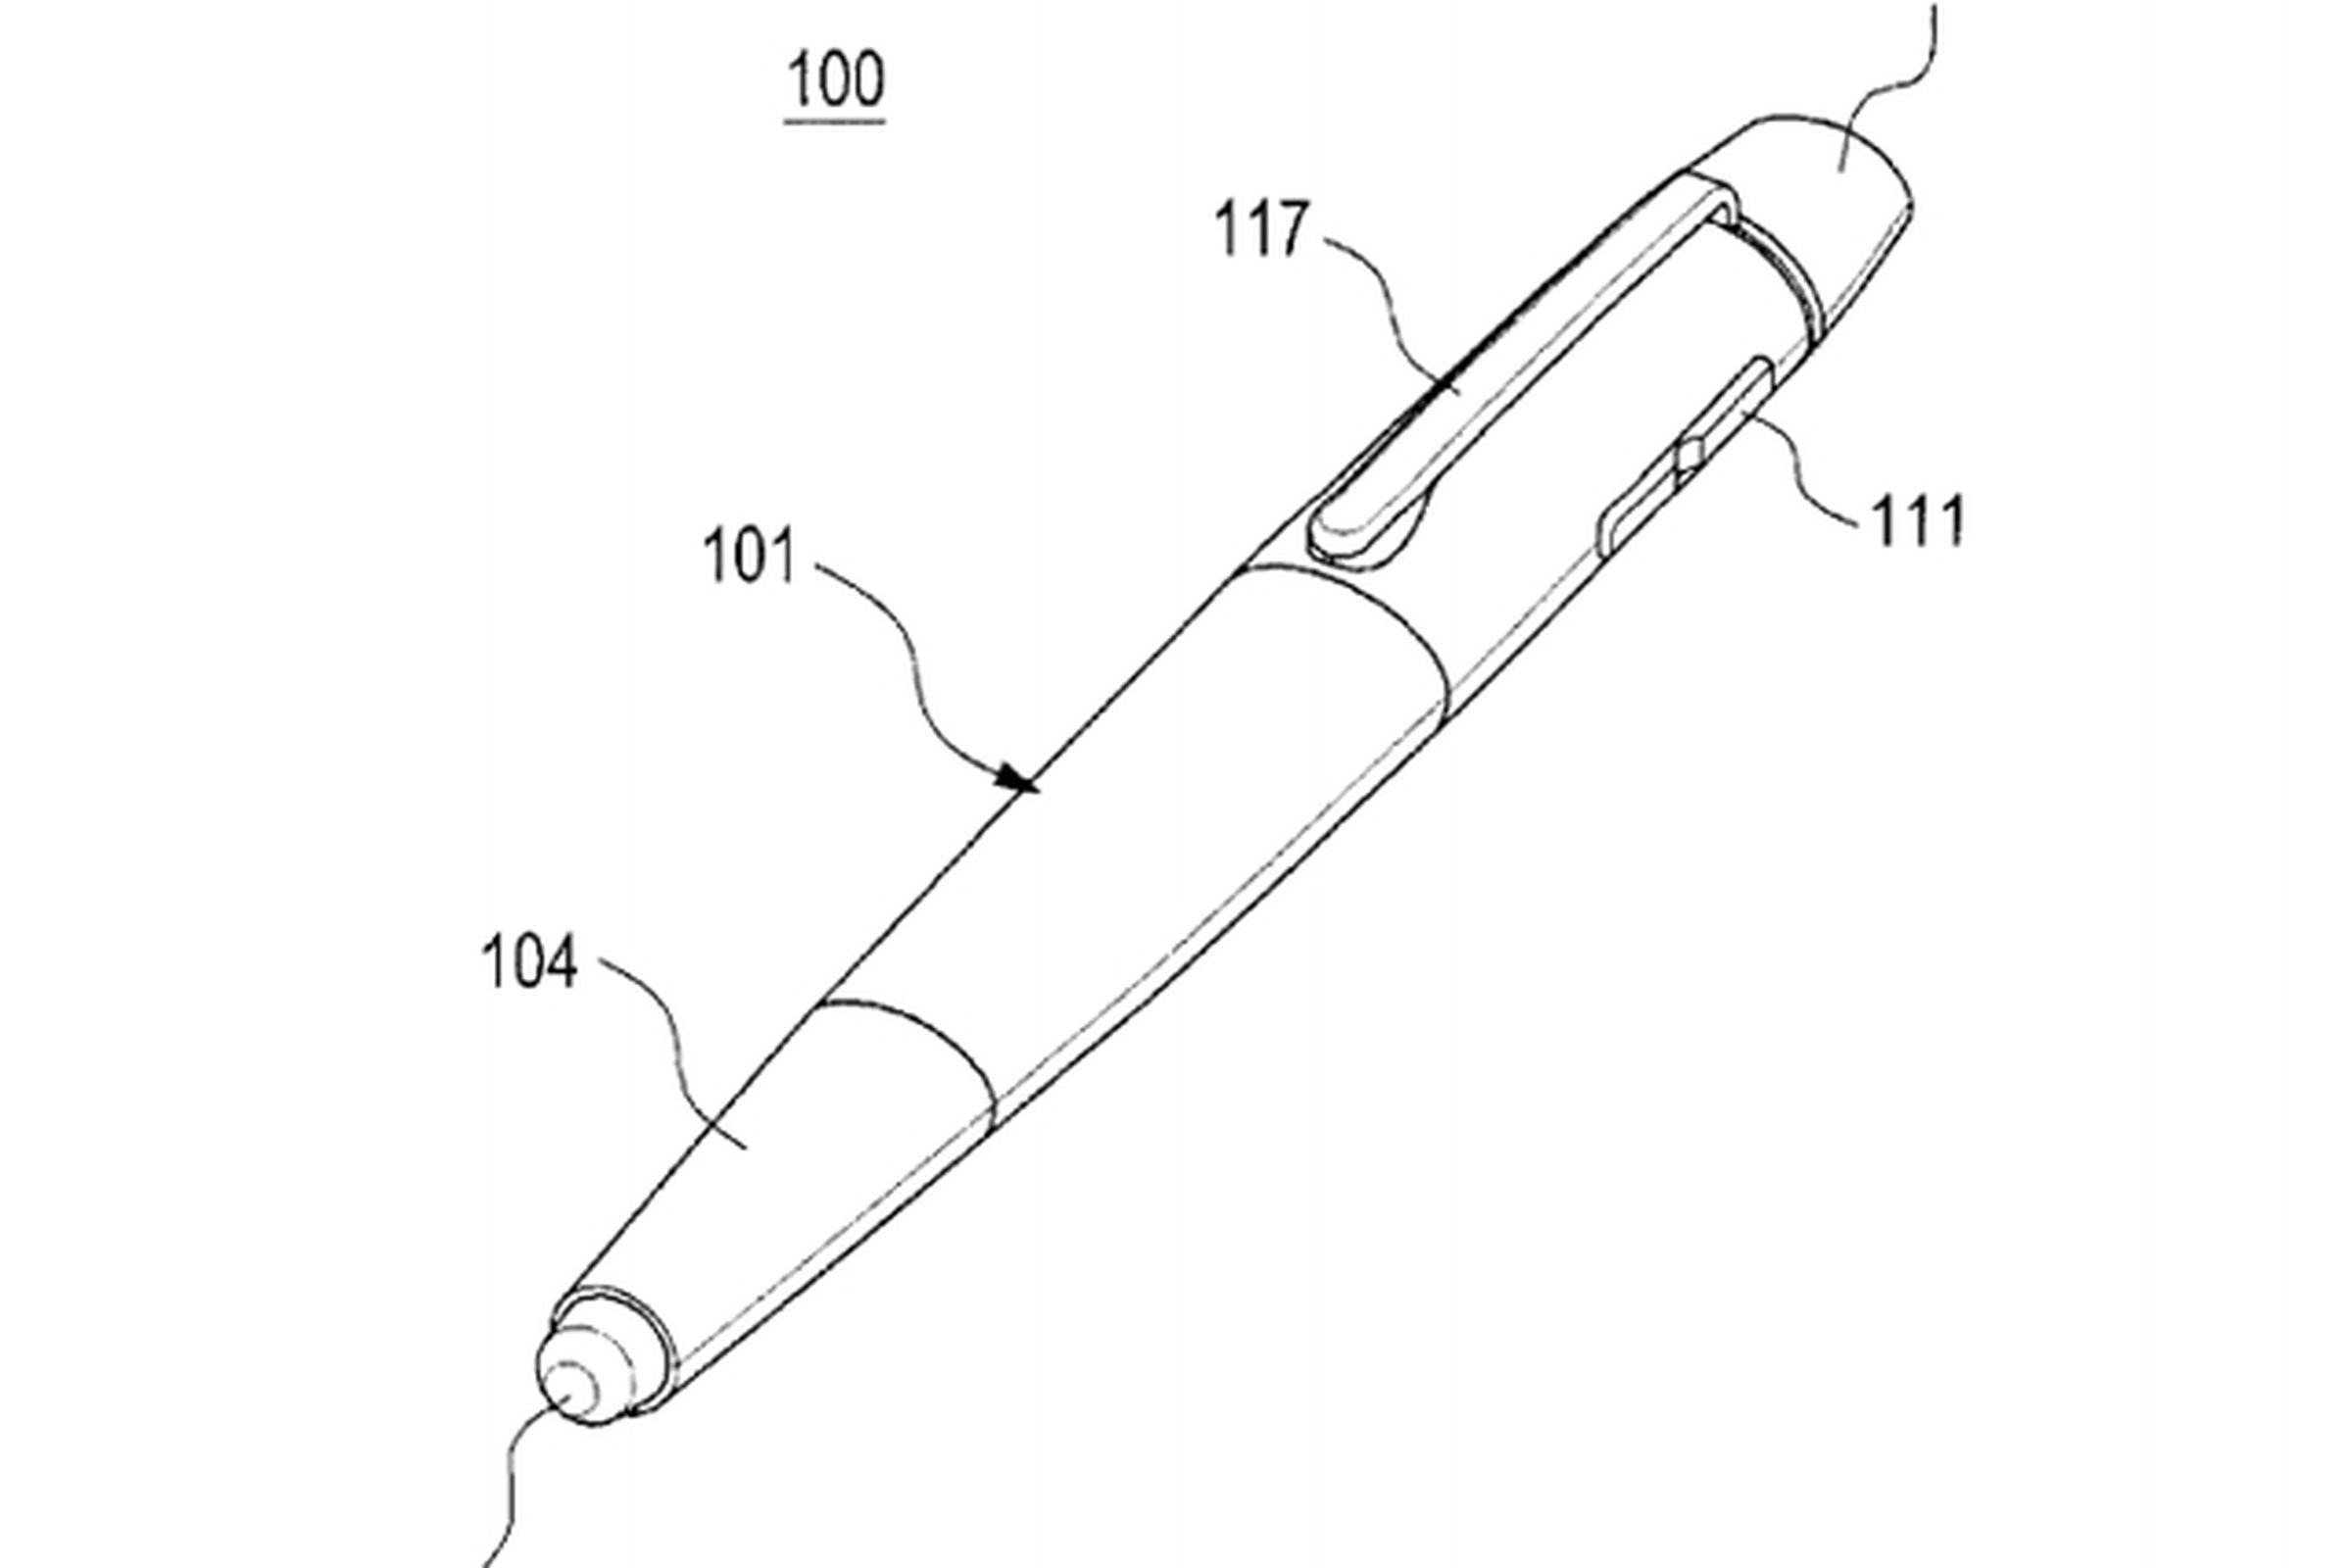 Samsung stylus patent image 